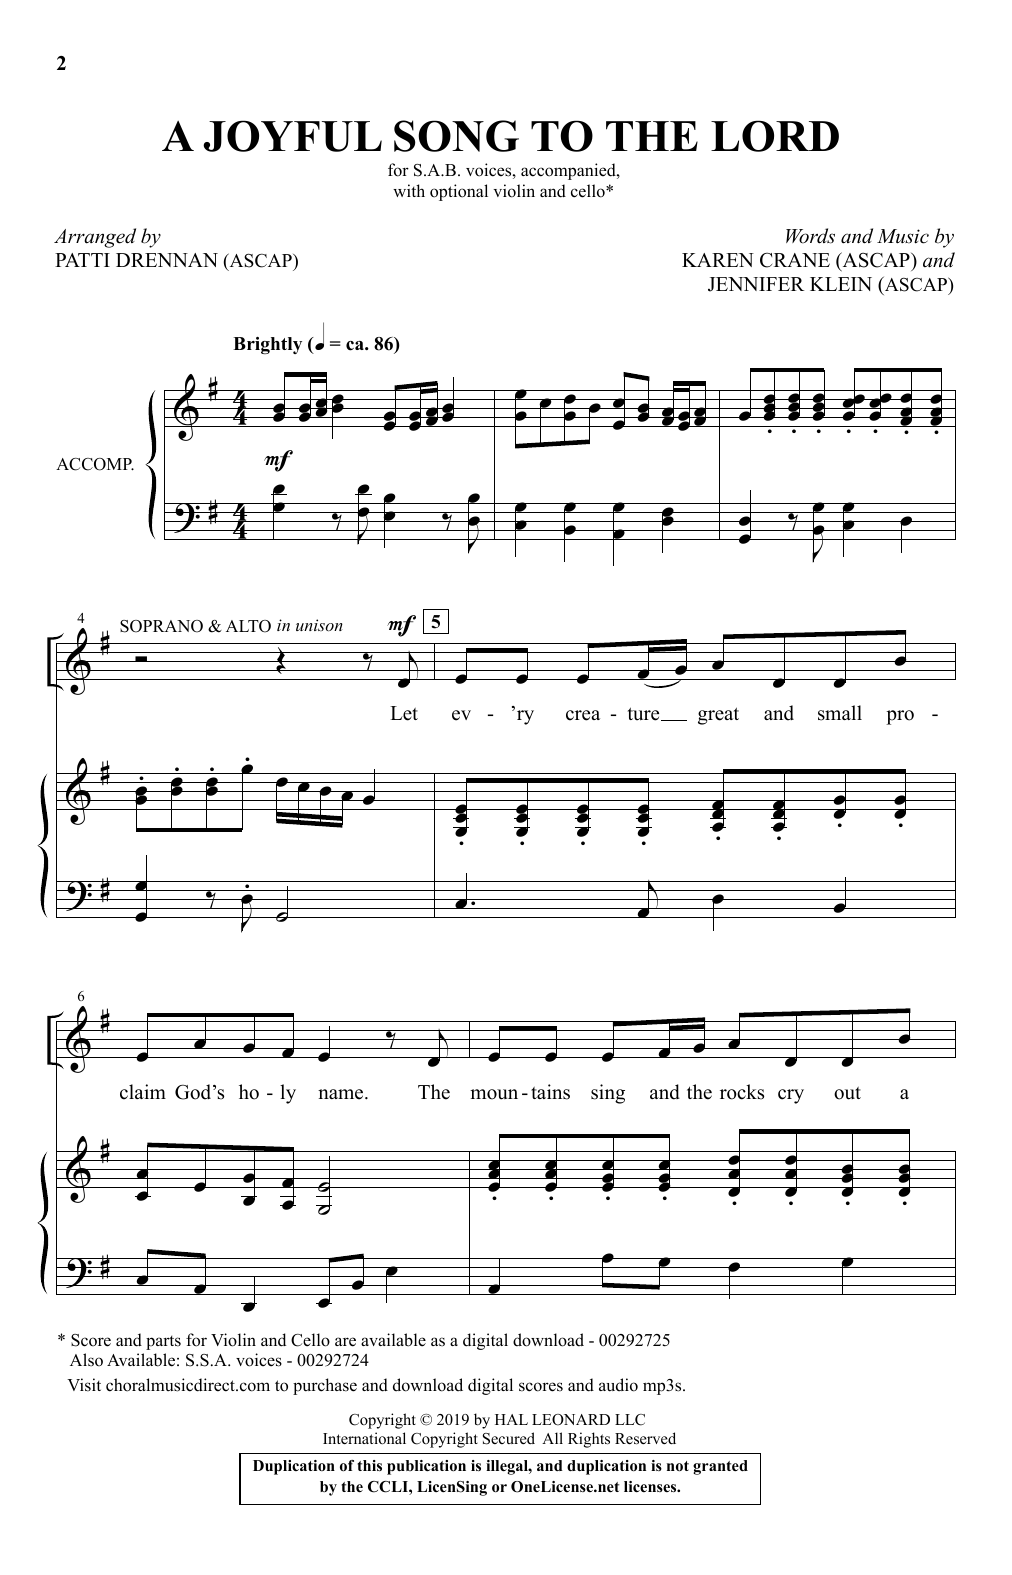 Karen Crane & Jennifer Klein A Joyful Song To The Lord (arr. Patti Drennan) Sheet Music Notes & Chords for SSA Choir - Download or Print PDF